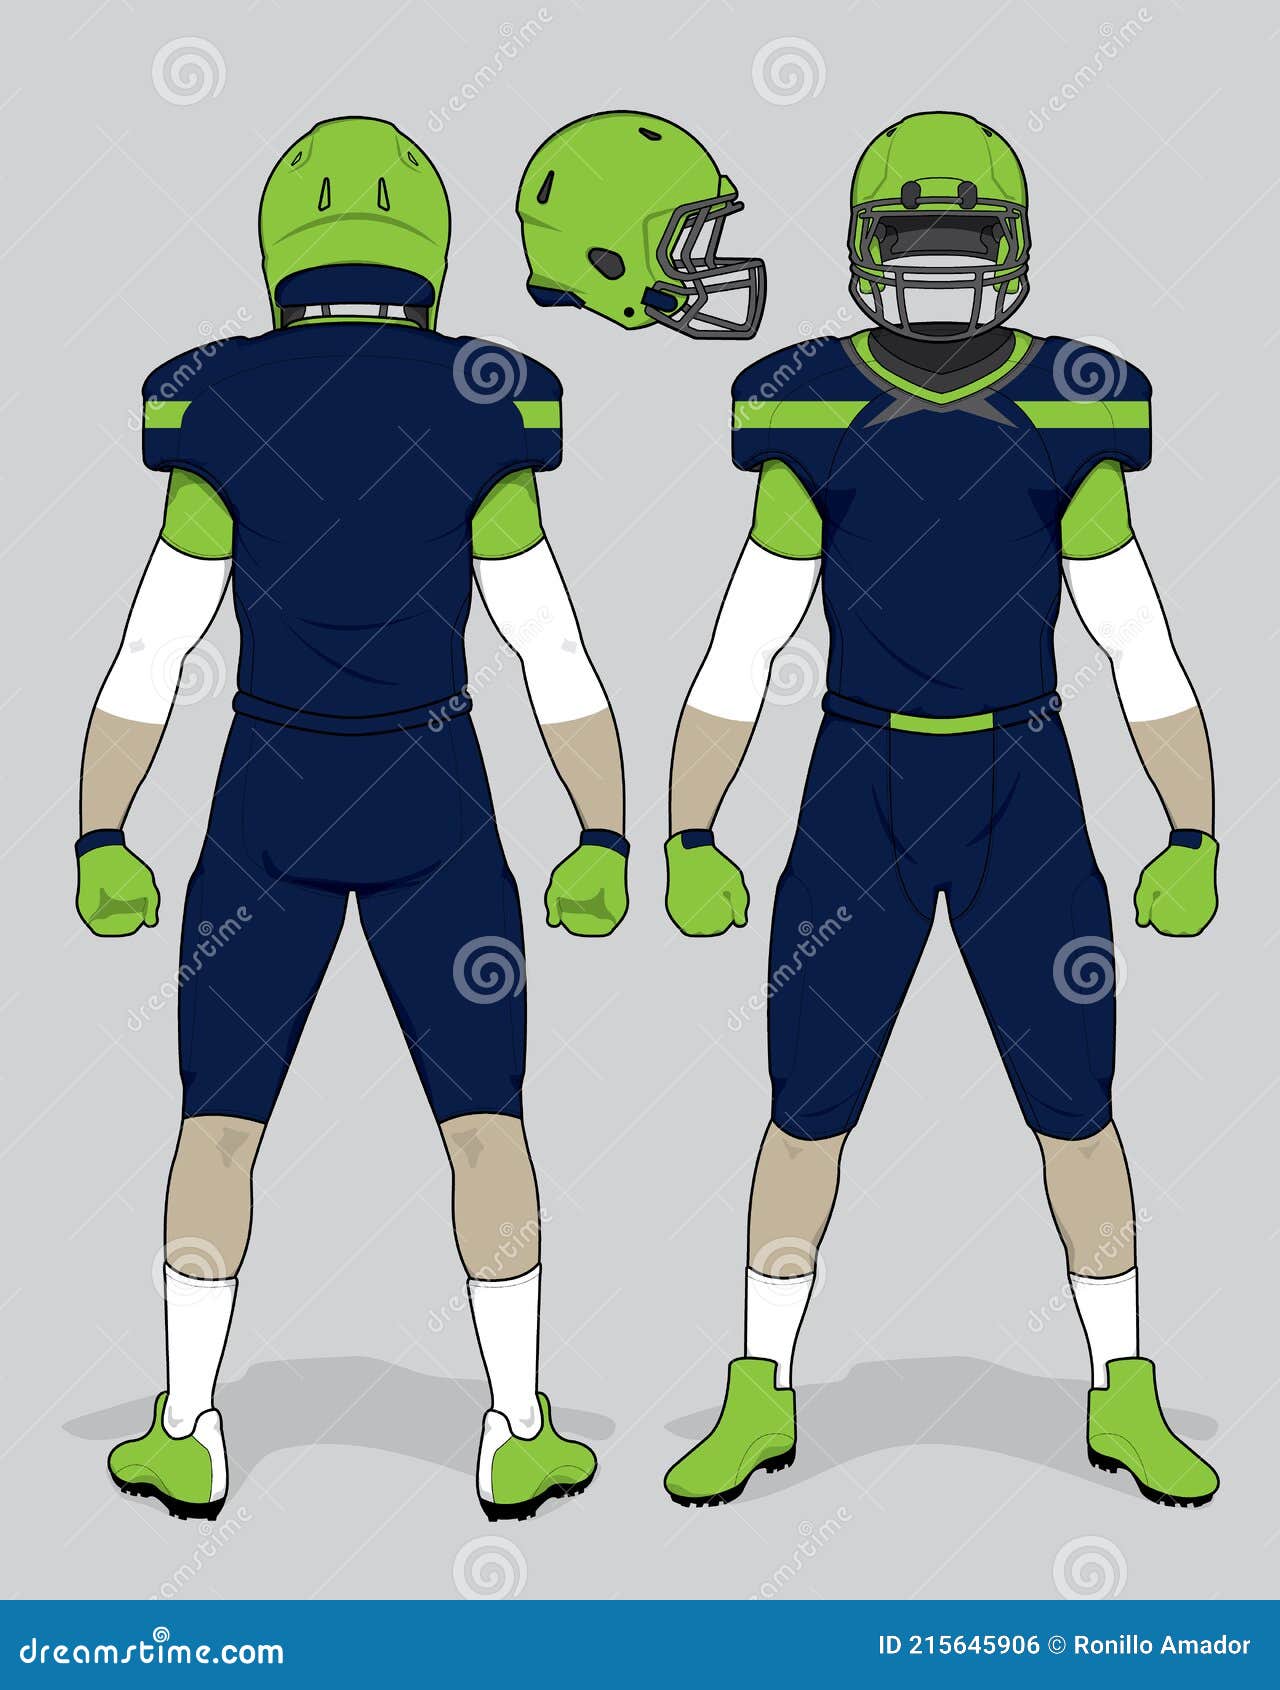 football uniforms template